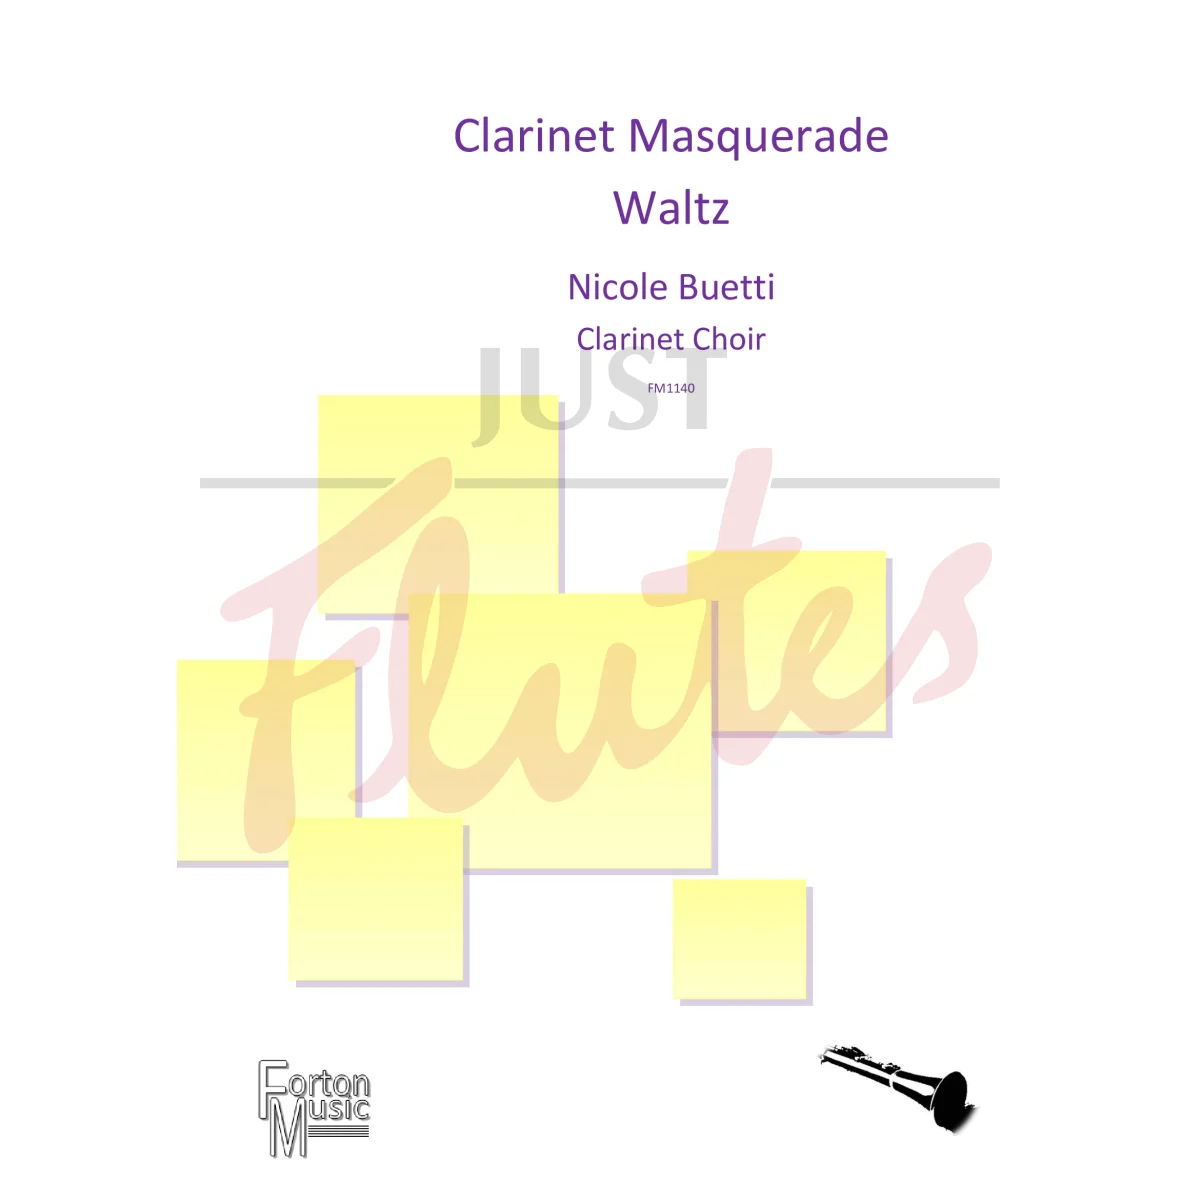 Clarinet Masquerade Waltz for Clarinet Ensemble